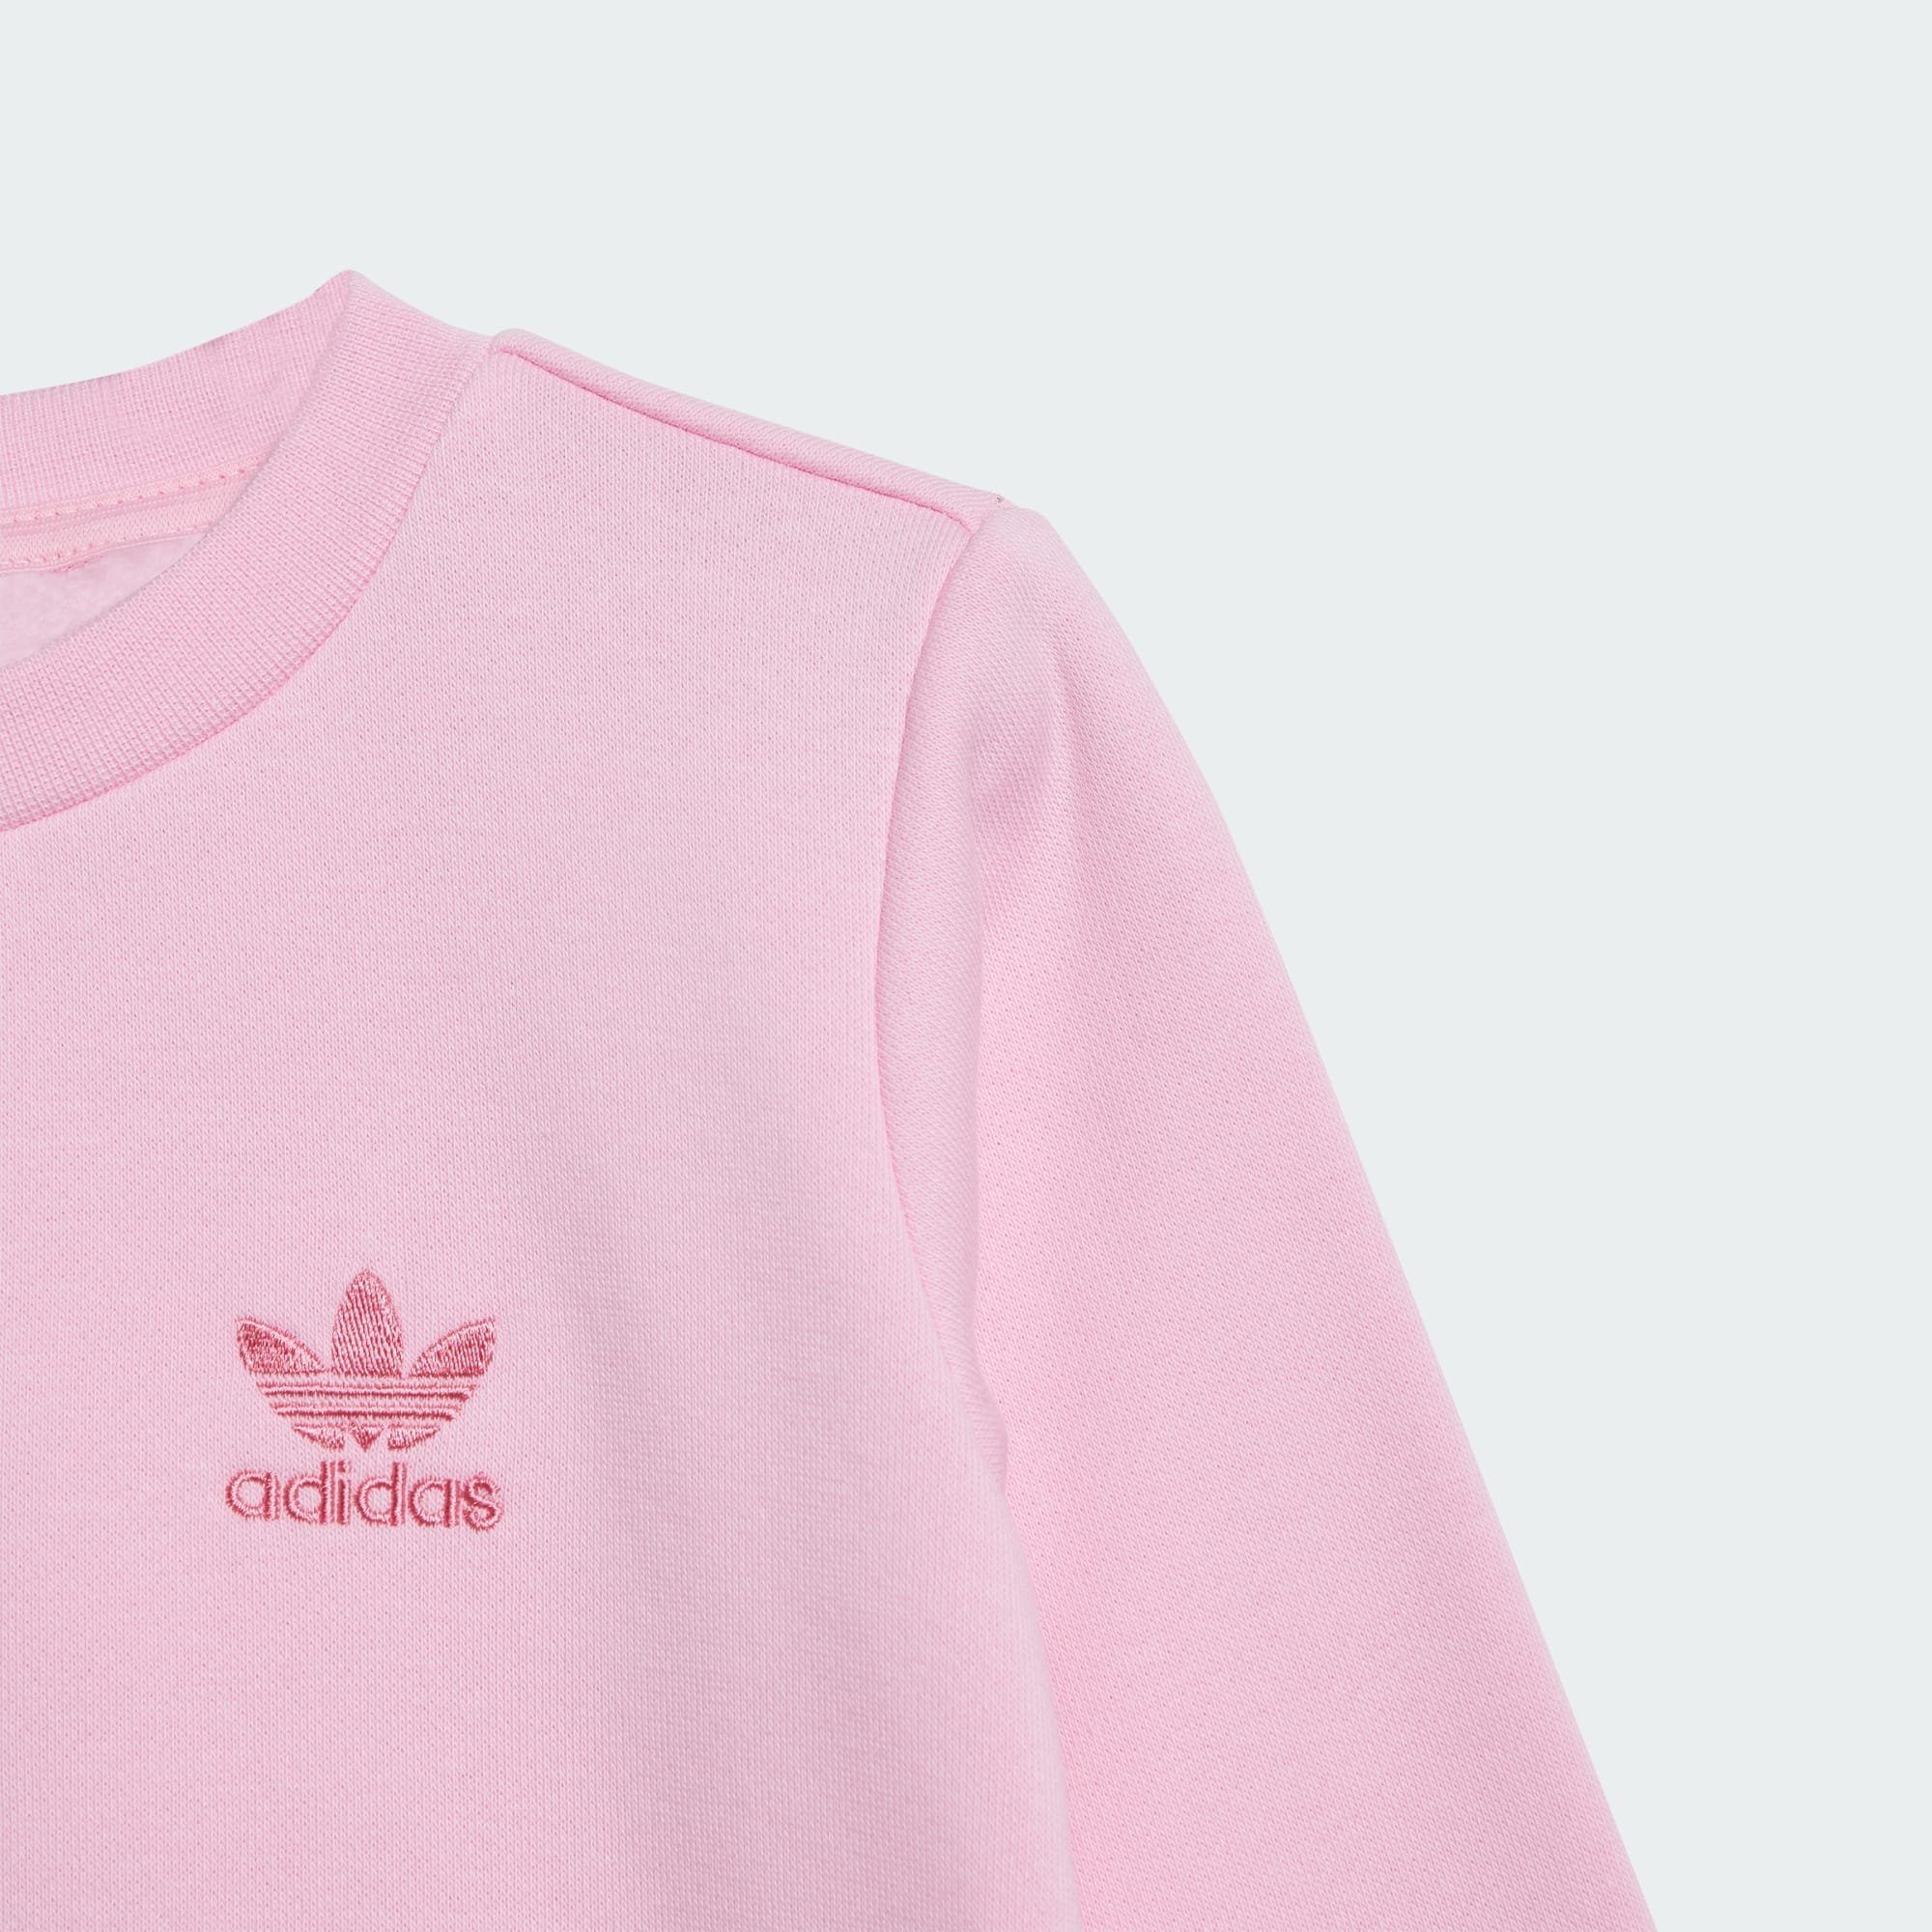 adidas Originals Trainingsanzug Pink ADICOLOR True SET